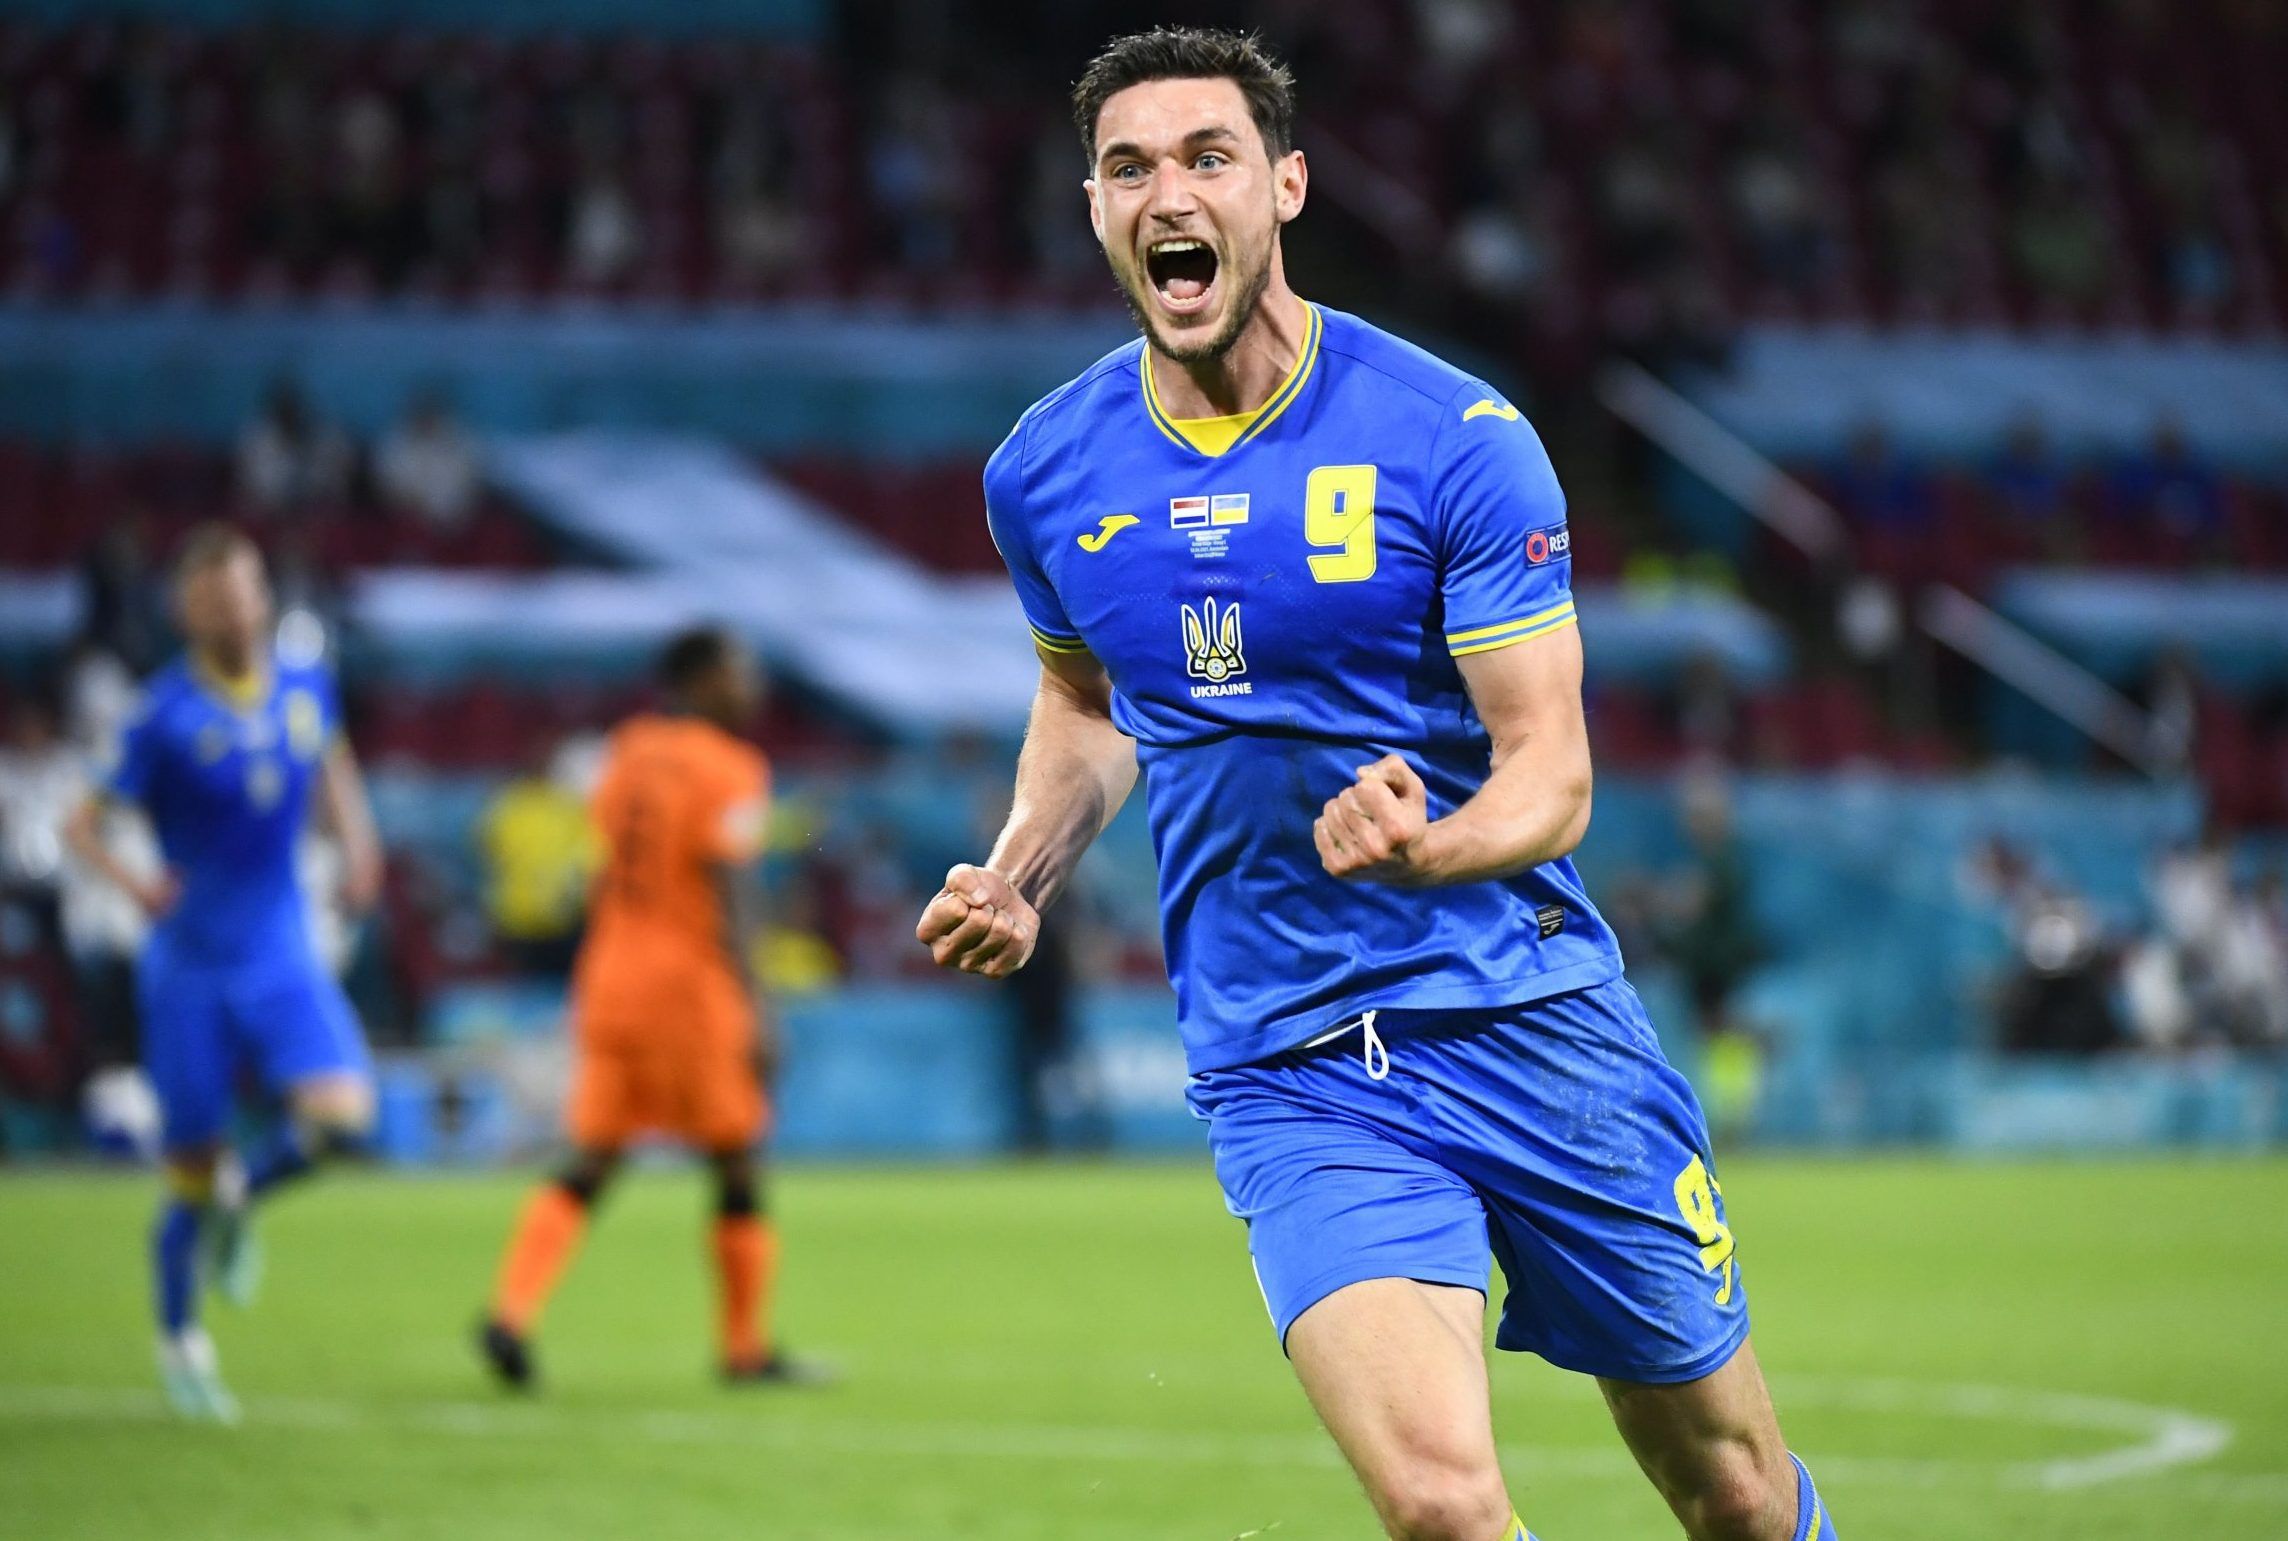 ukraine striker roman yaremchuk celebrates scoring against netherlands in group c at euro 2020